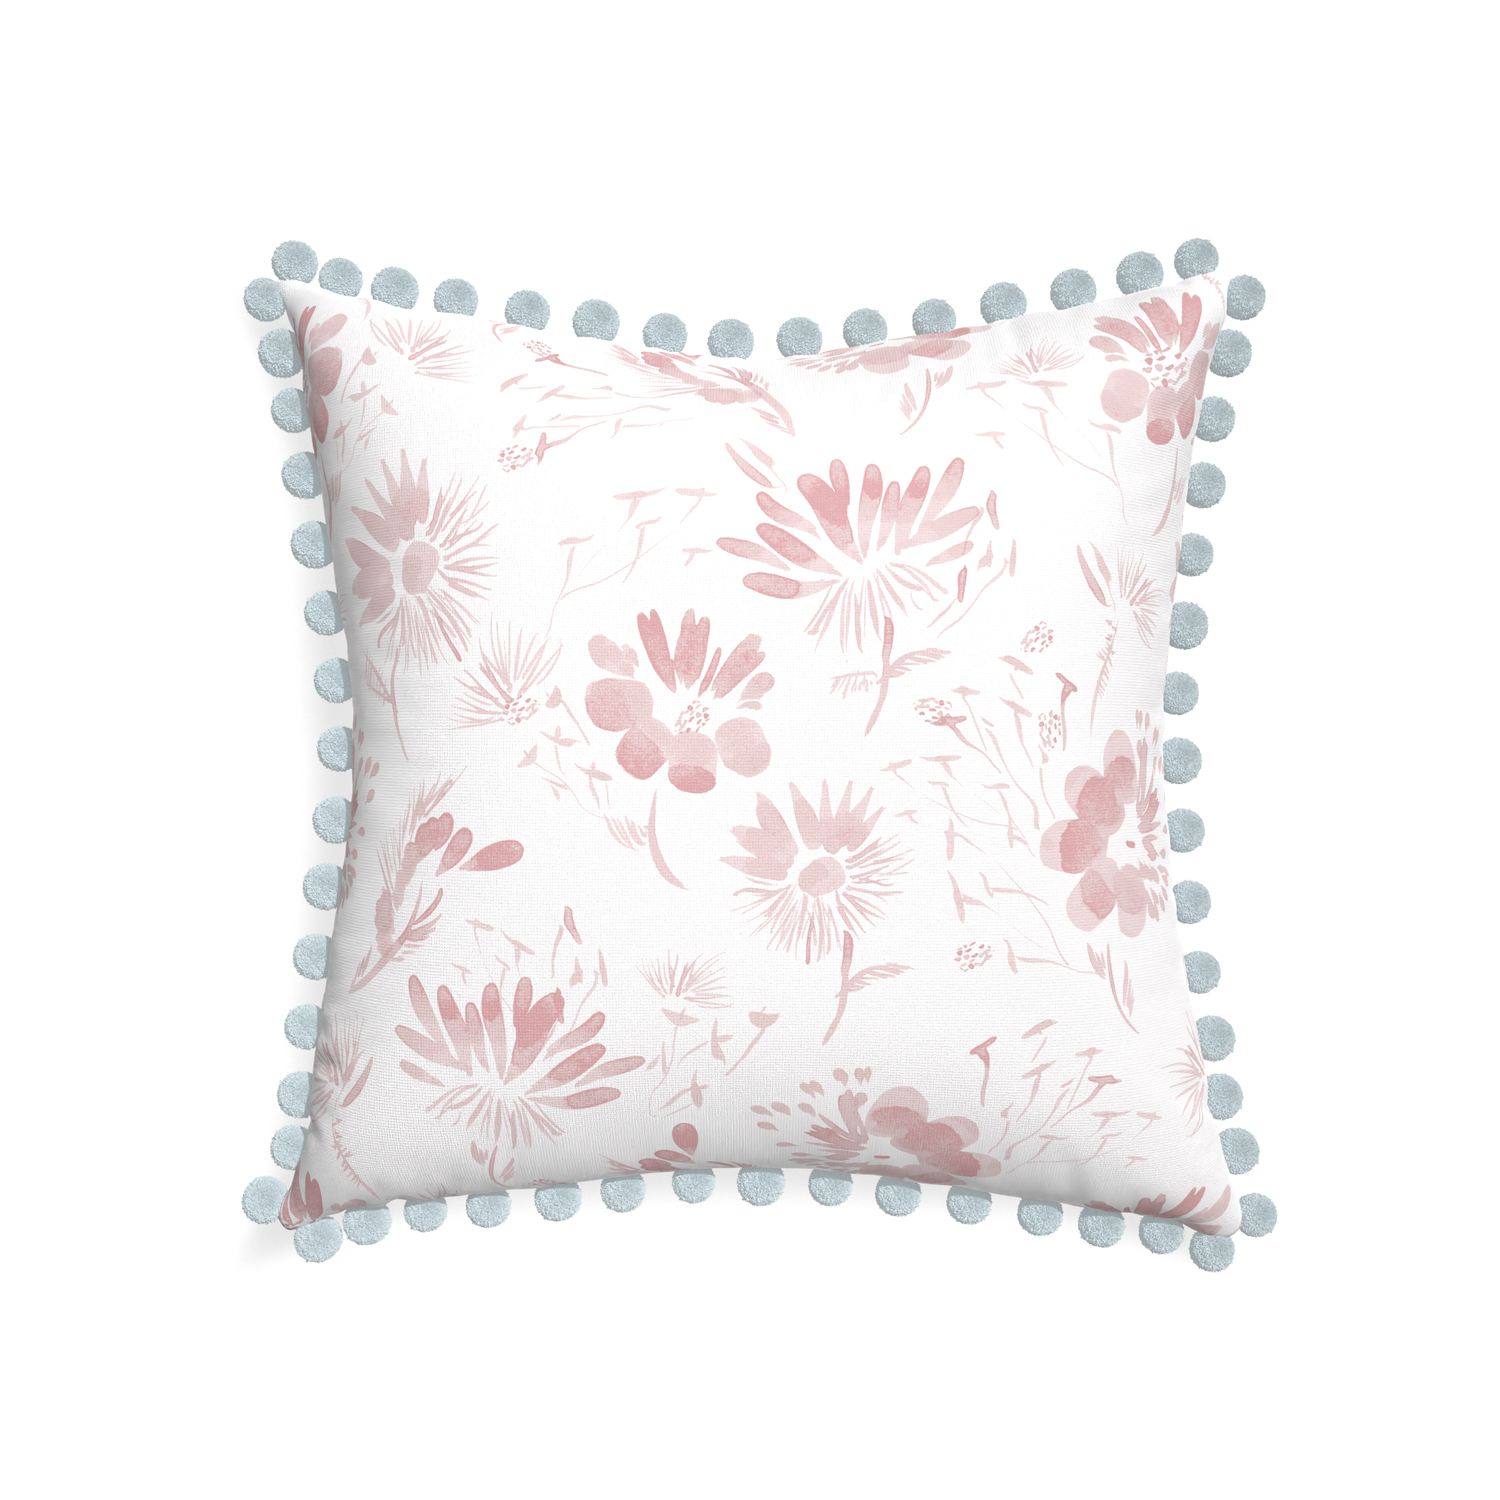 22-square blake custom pink floralpillow with powder pom pom on white background